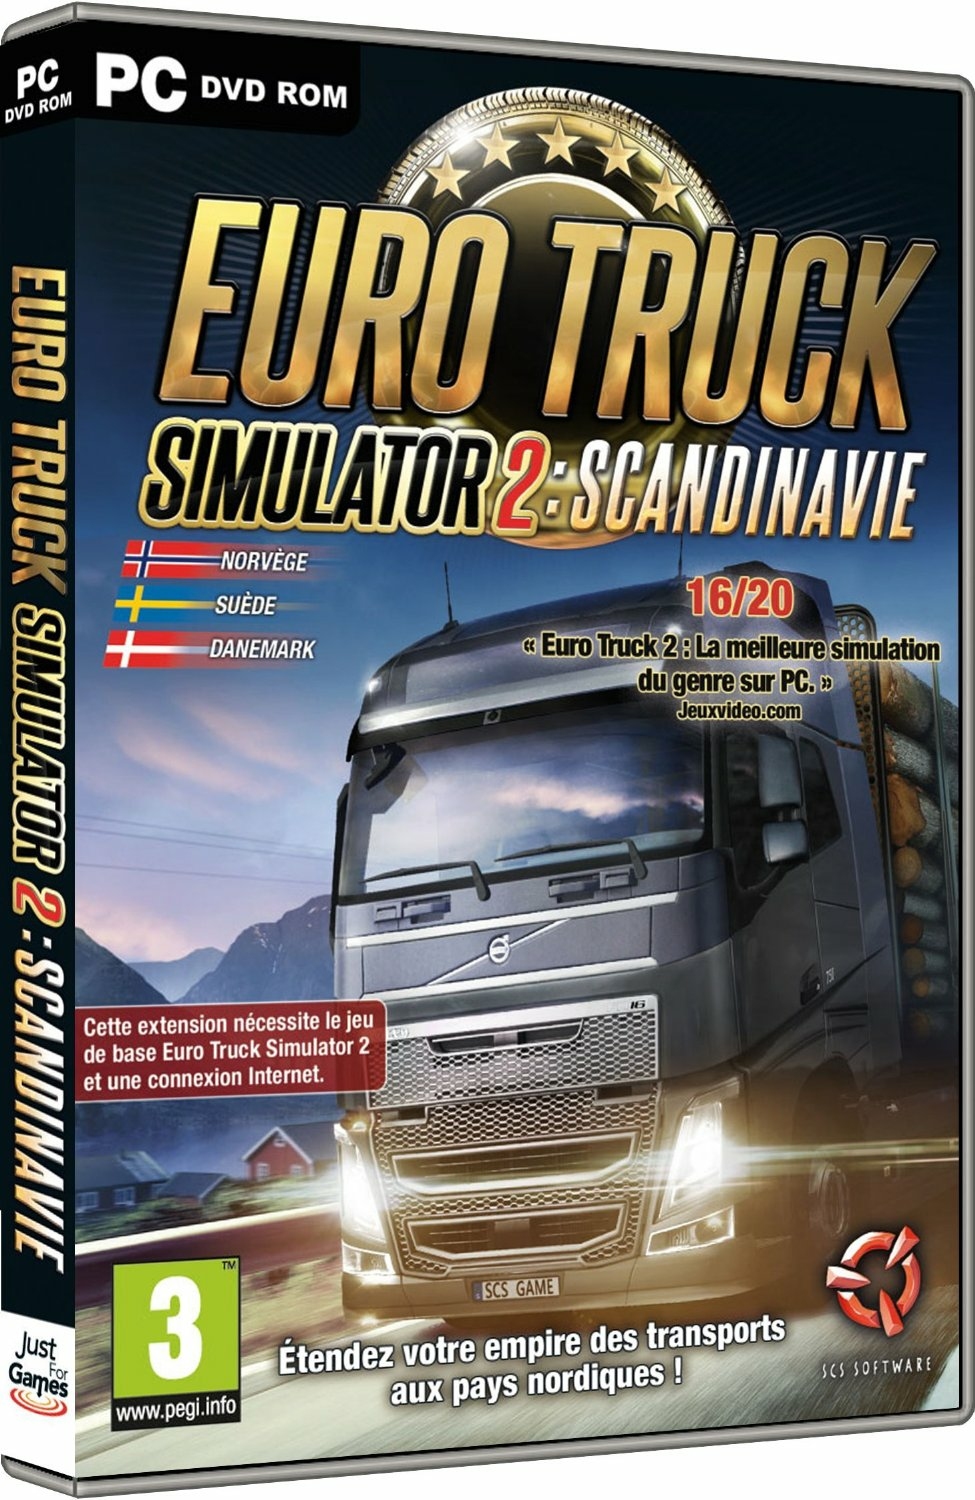 euro truck simulator 2 scandinavia